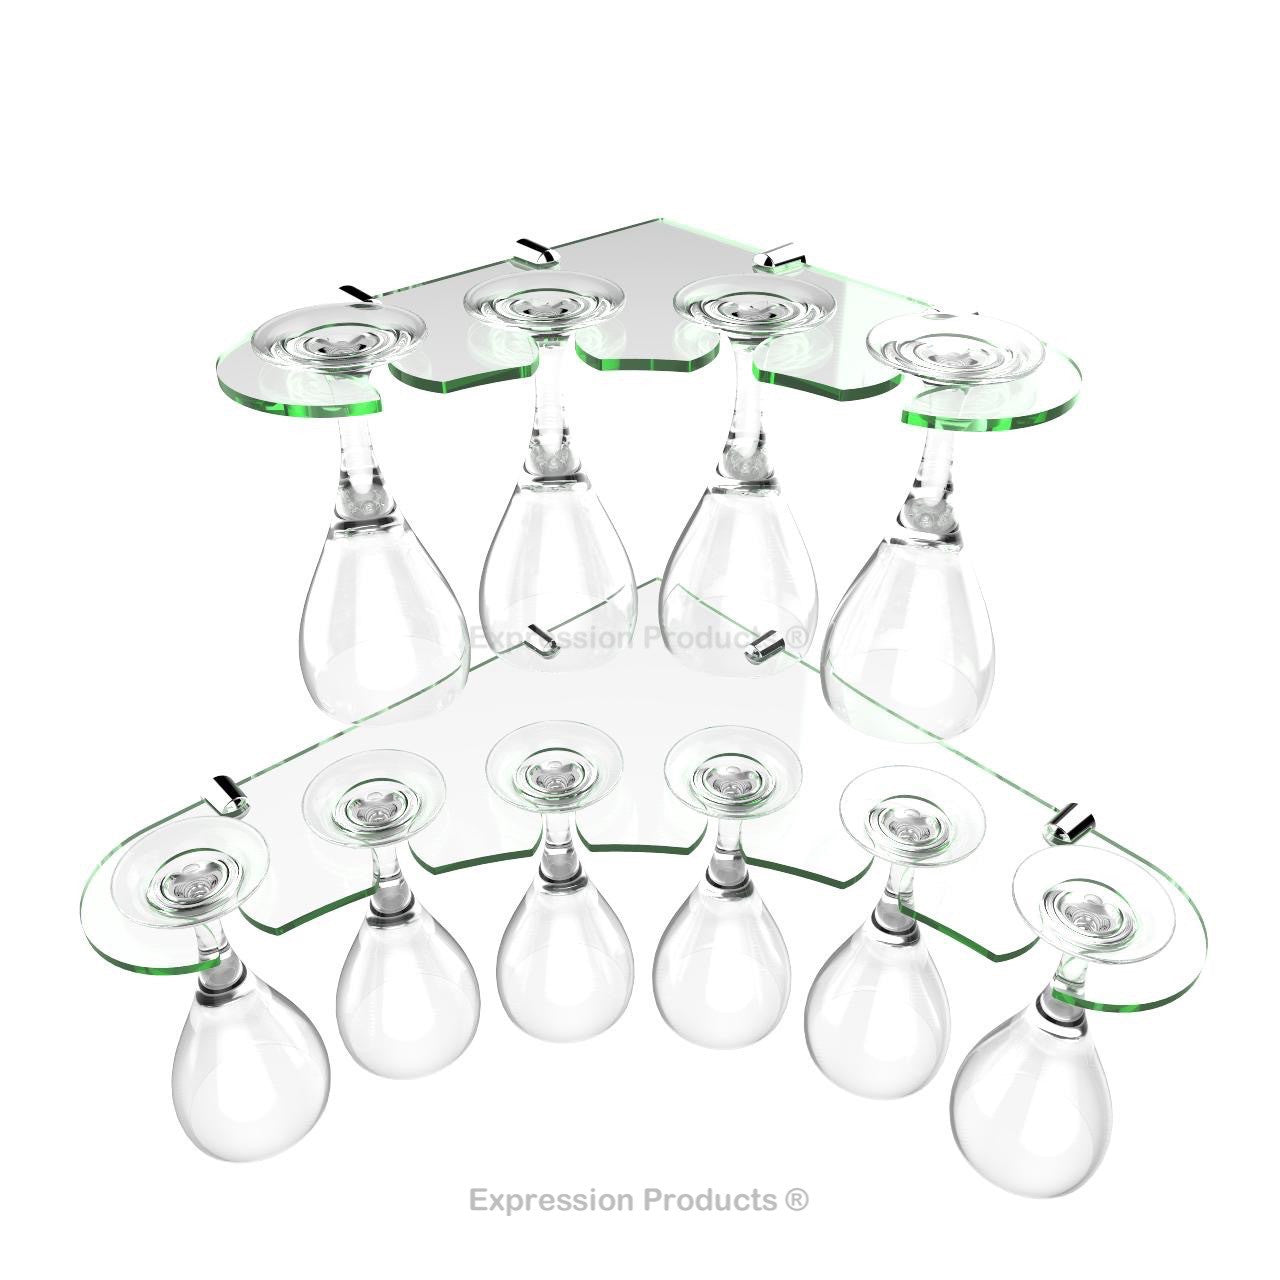 Corner Wine Glass Holder - Expression Products Ltd